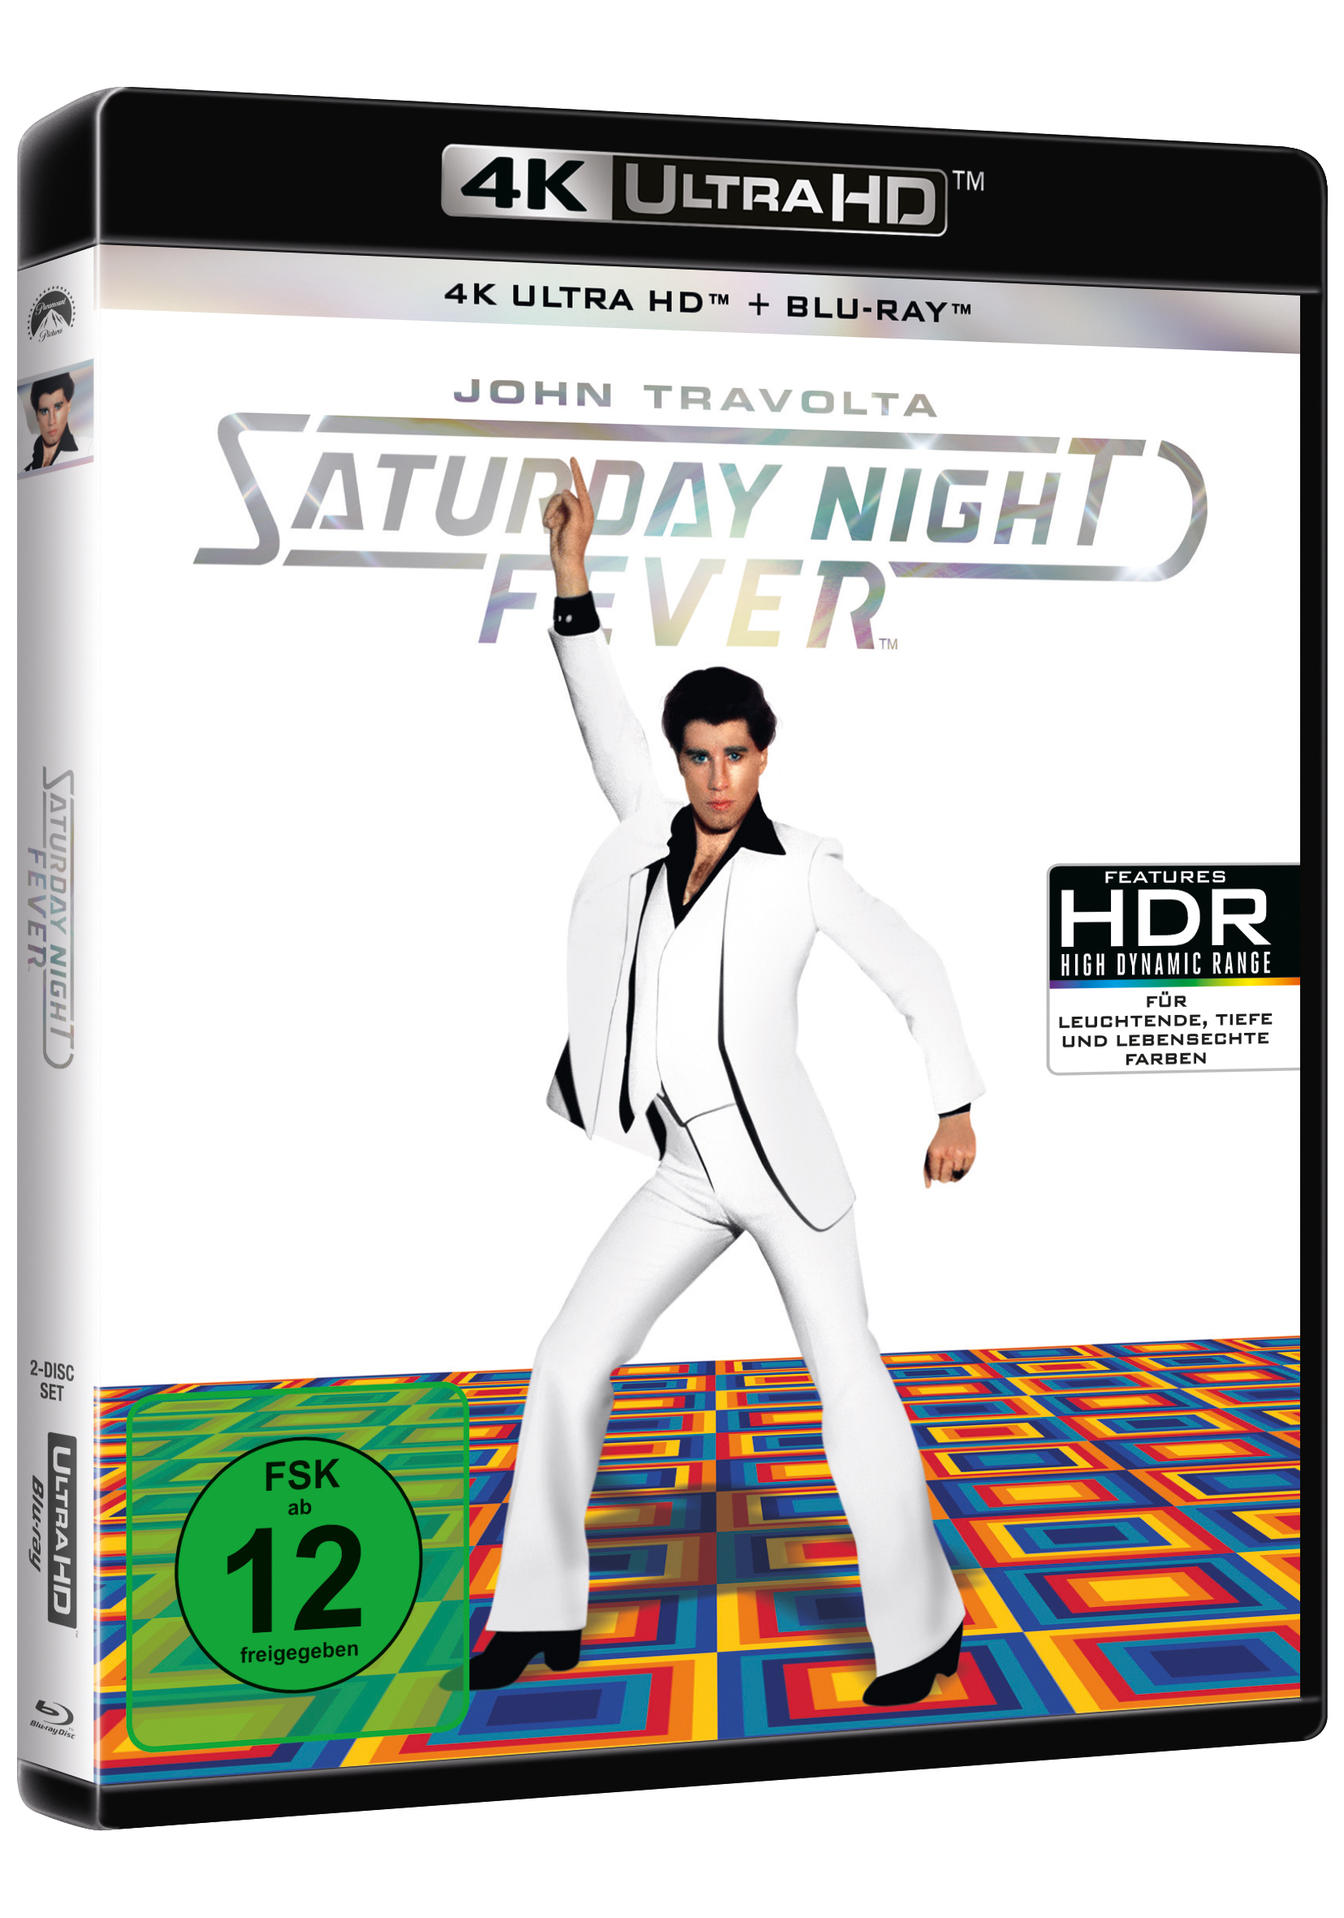 4K Fever Saturday + HD Night Blu-ray Blu-ray Ultra